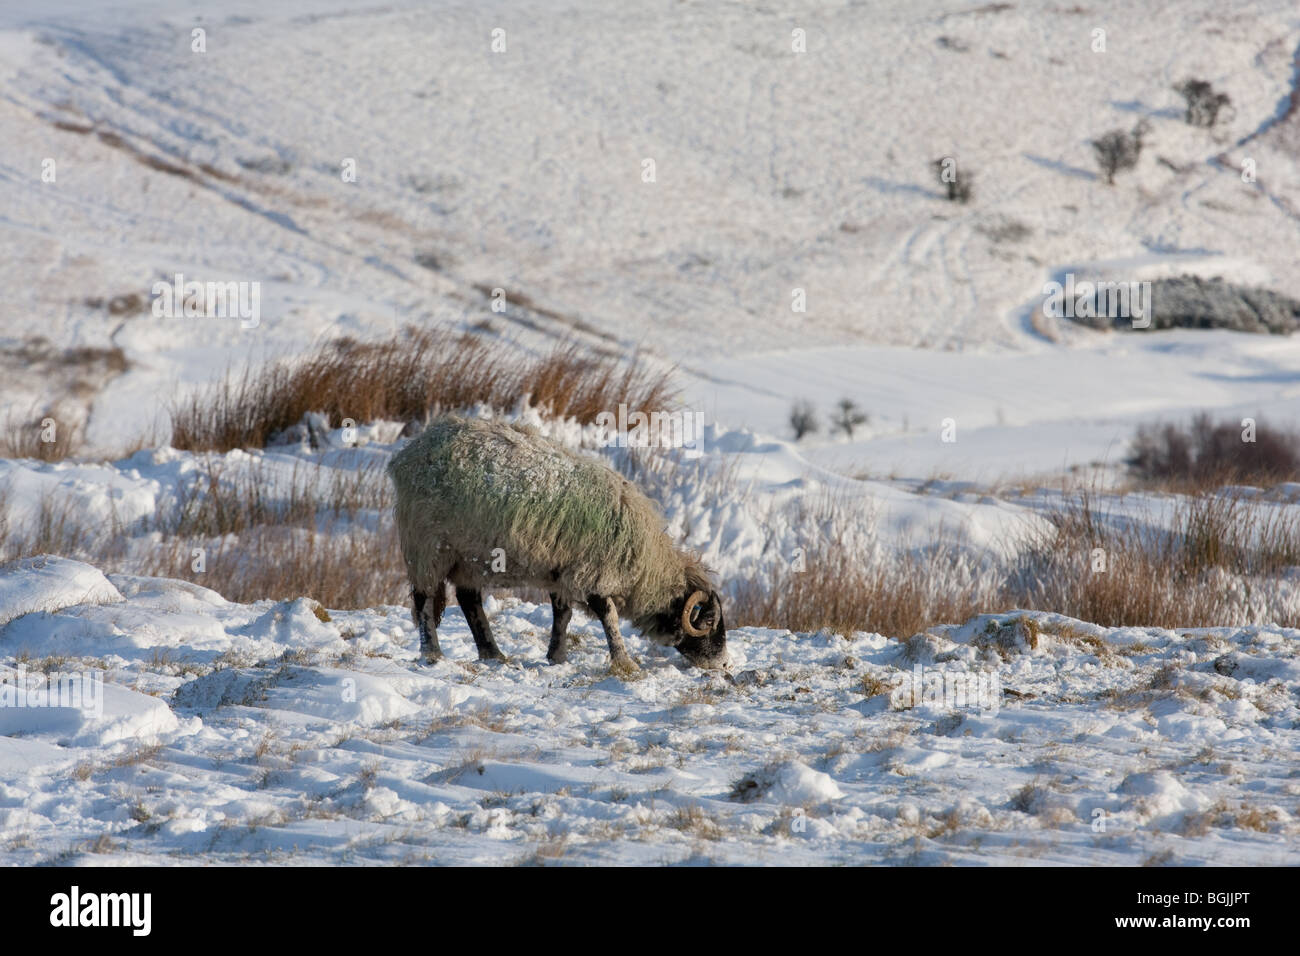 Pennine hill farm sheep on snowy moorland in winter Stock Photo